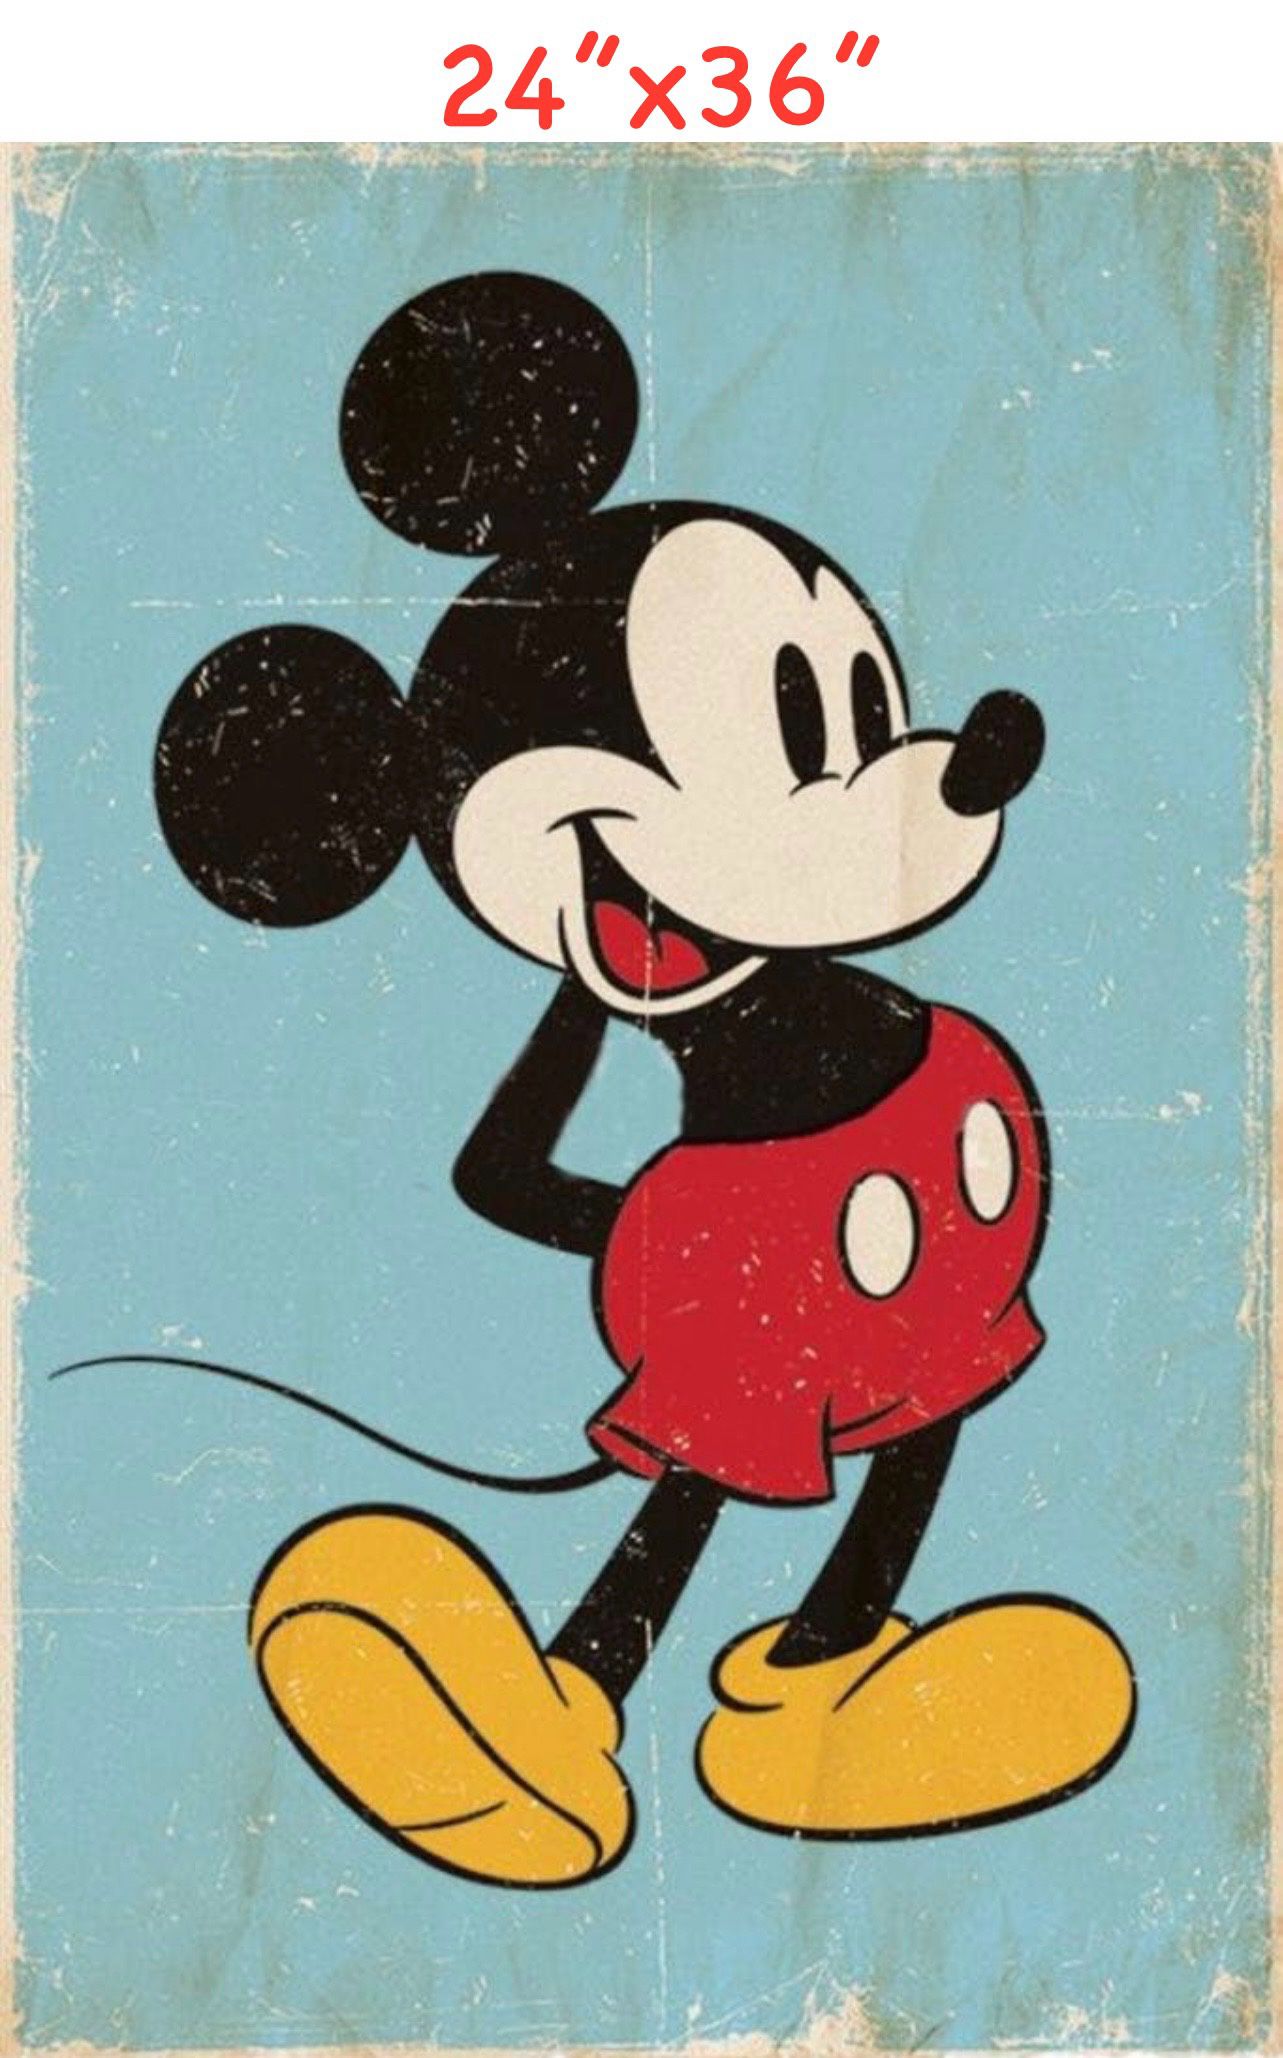 Mickey Mouse - Retro Disney Classic 24x36 Poster Art Print - Brand New